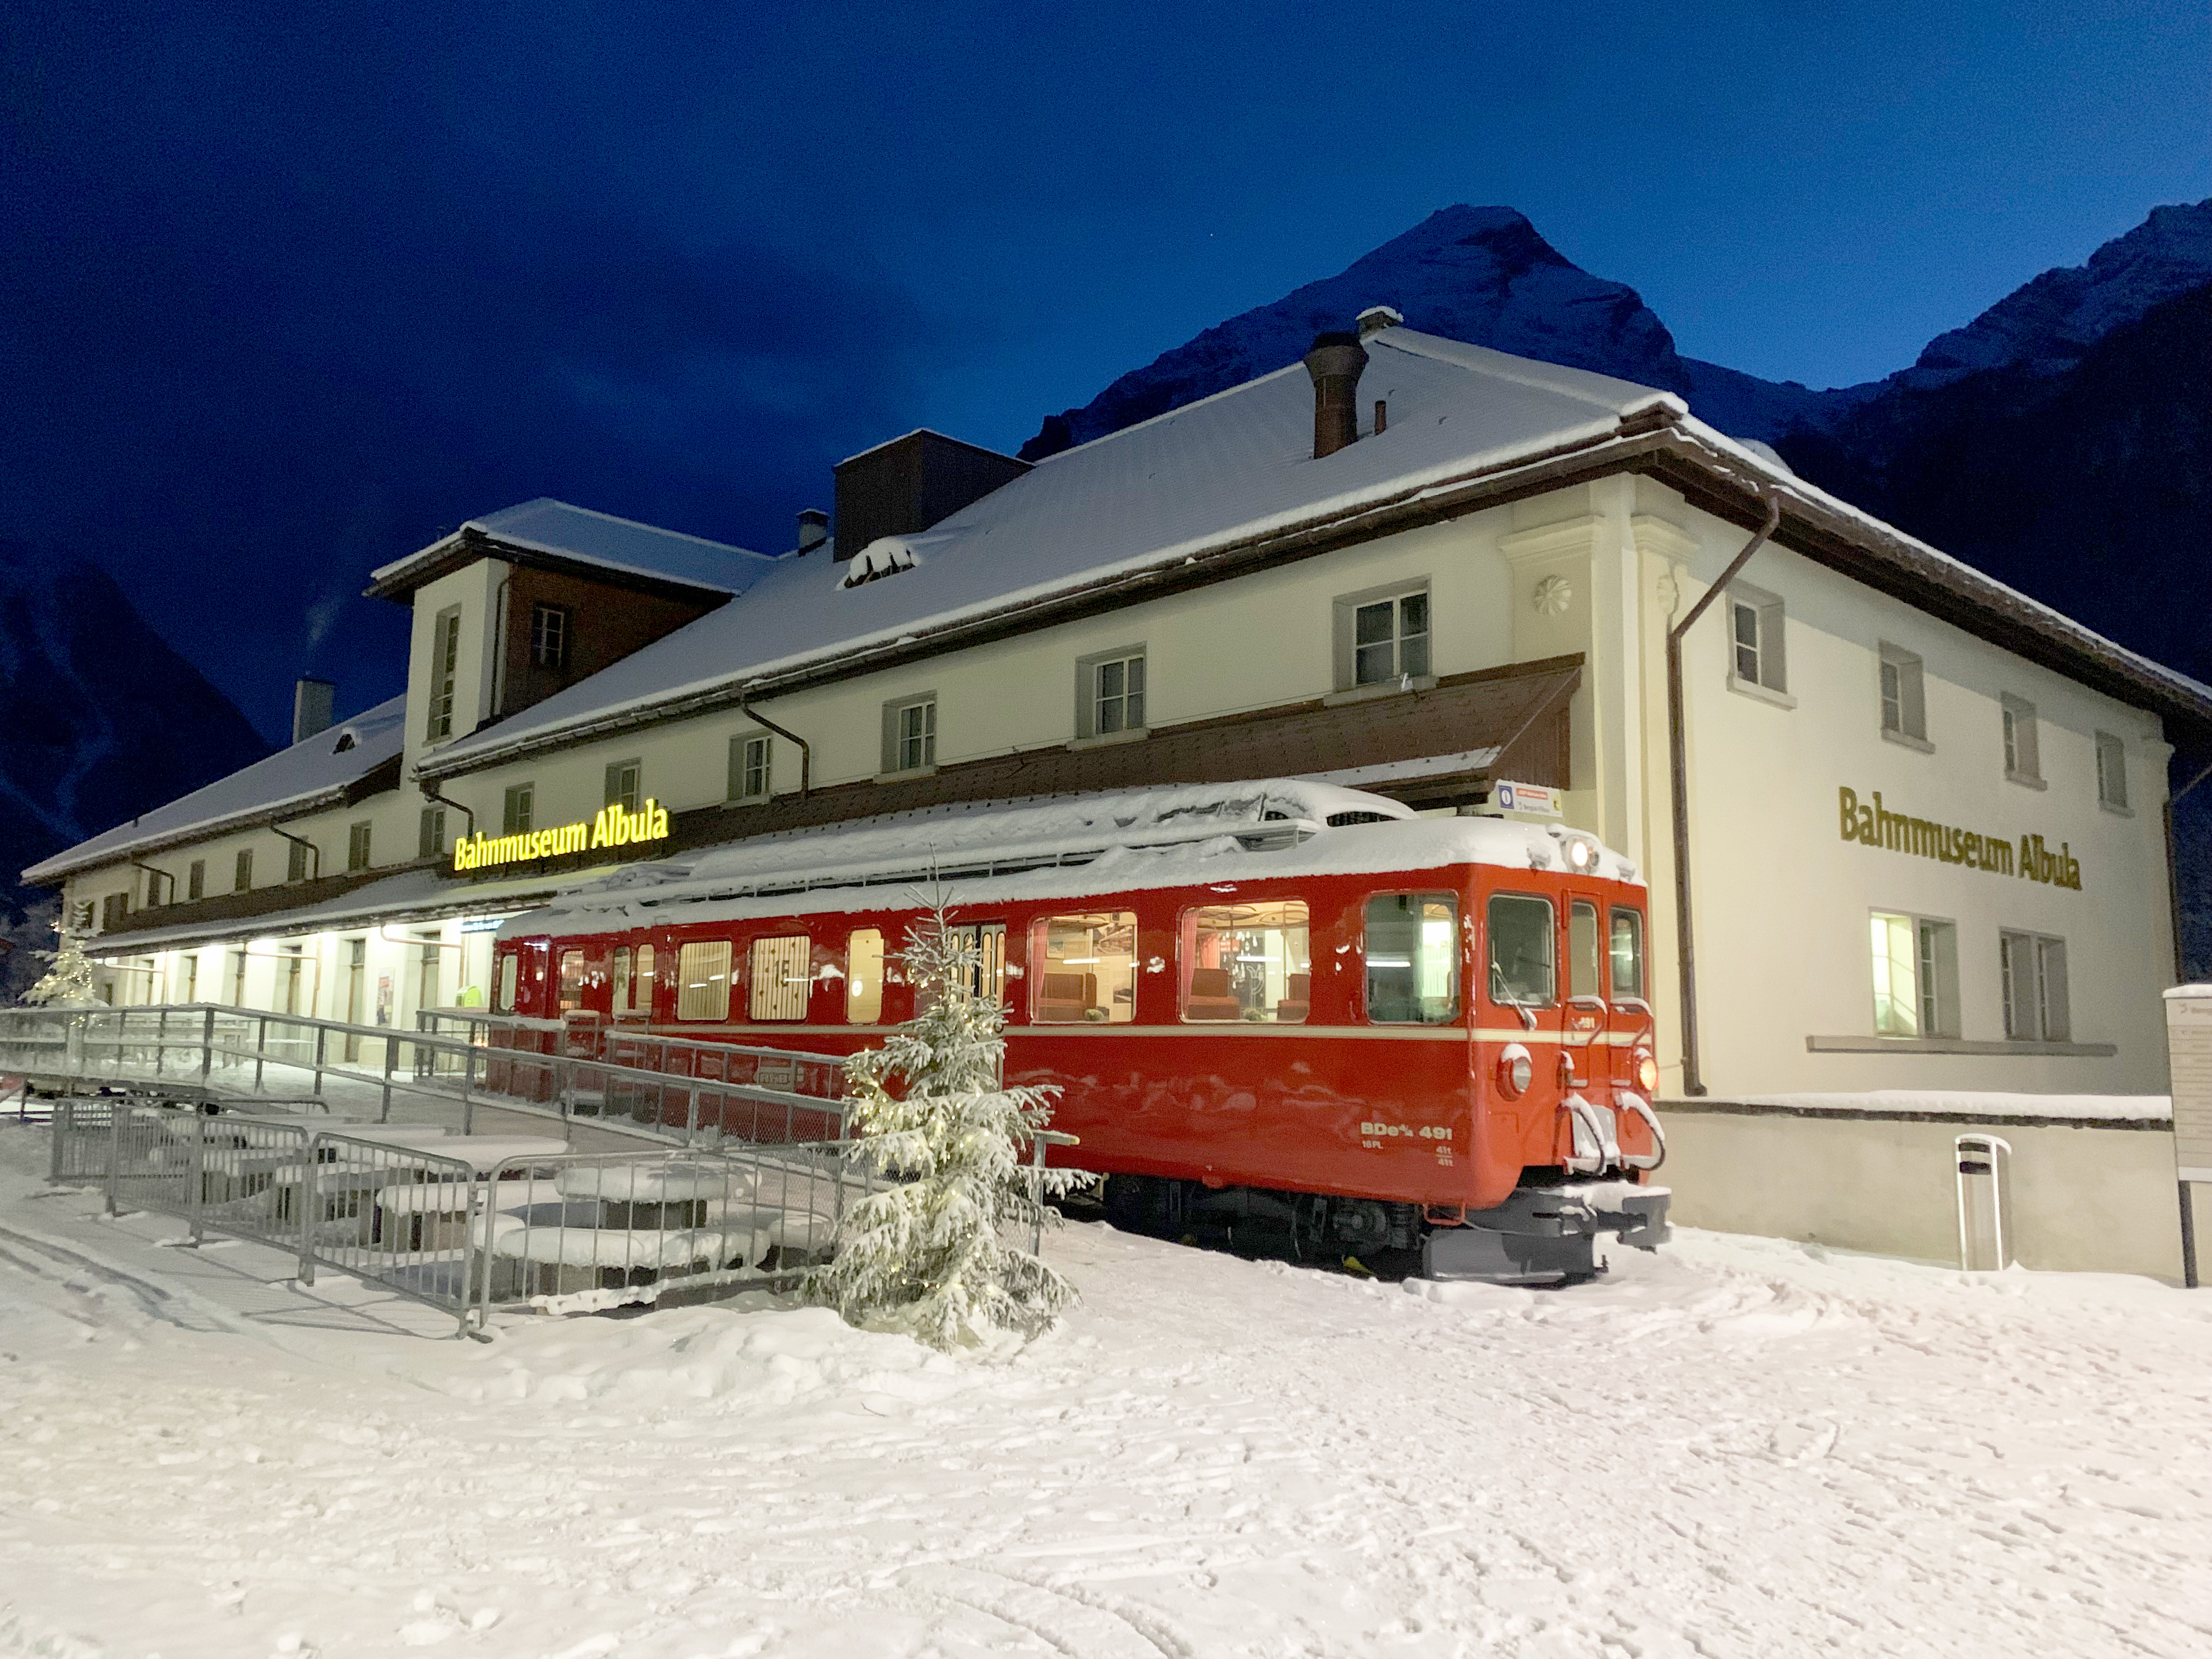 Wintersaisonstart Bahnmuseum Albula!!